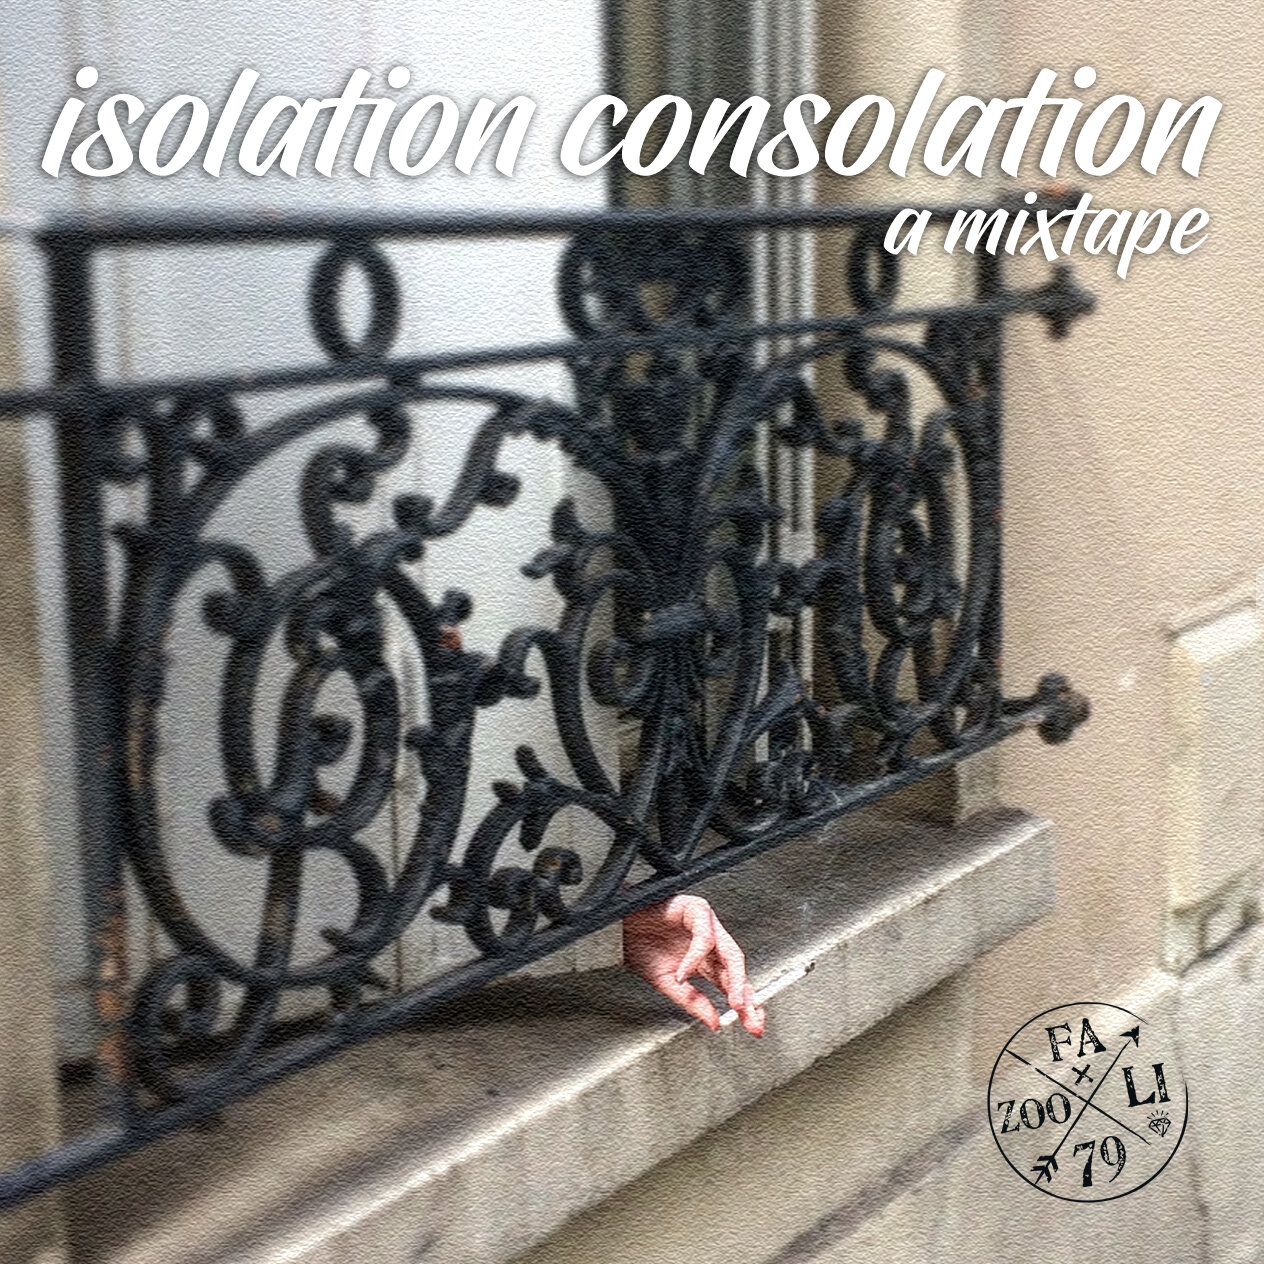 Isolation-Mix.jpg